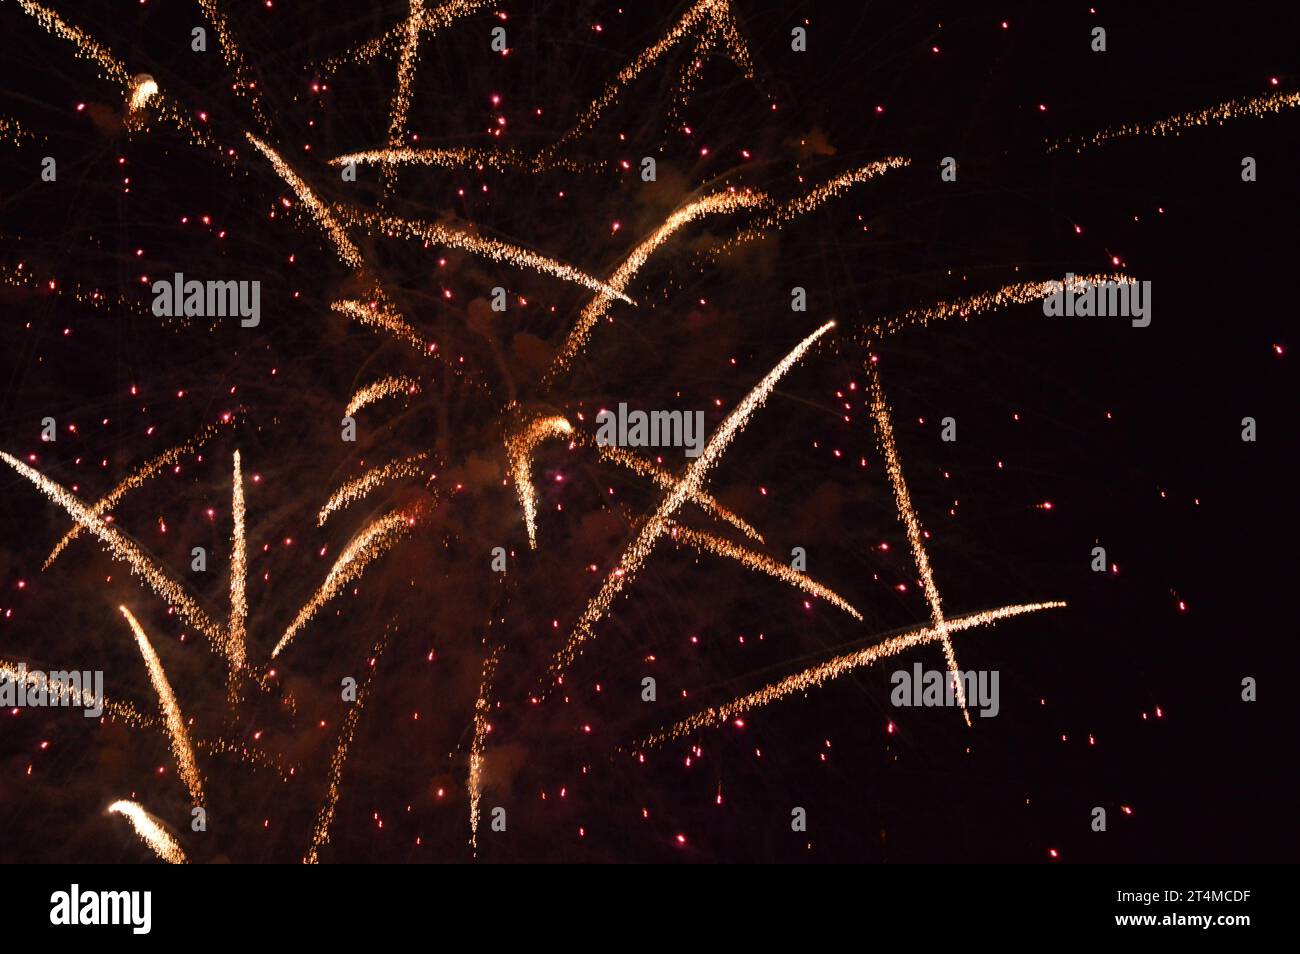 'Theatrical Firework Display' 'Spectacular Explosive Show' 'Nighttime Firework Bonanza' 'Firework Finale Fantasia' 'Blazing Nighttime Revelry' 'Aerial Stock Photo